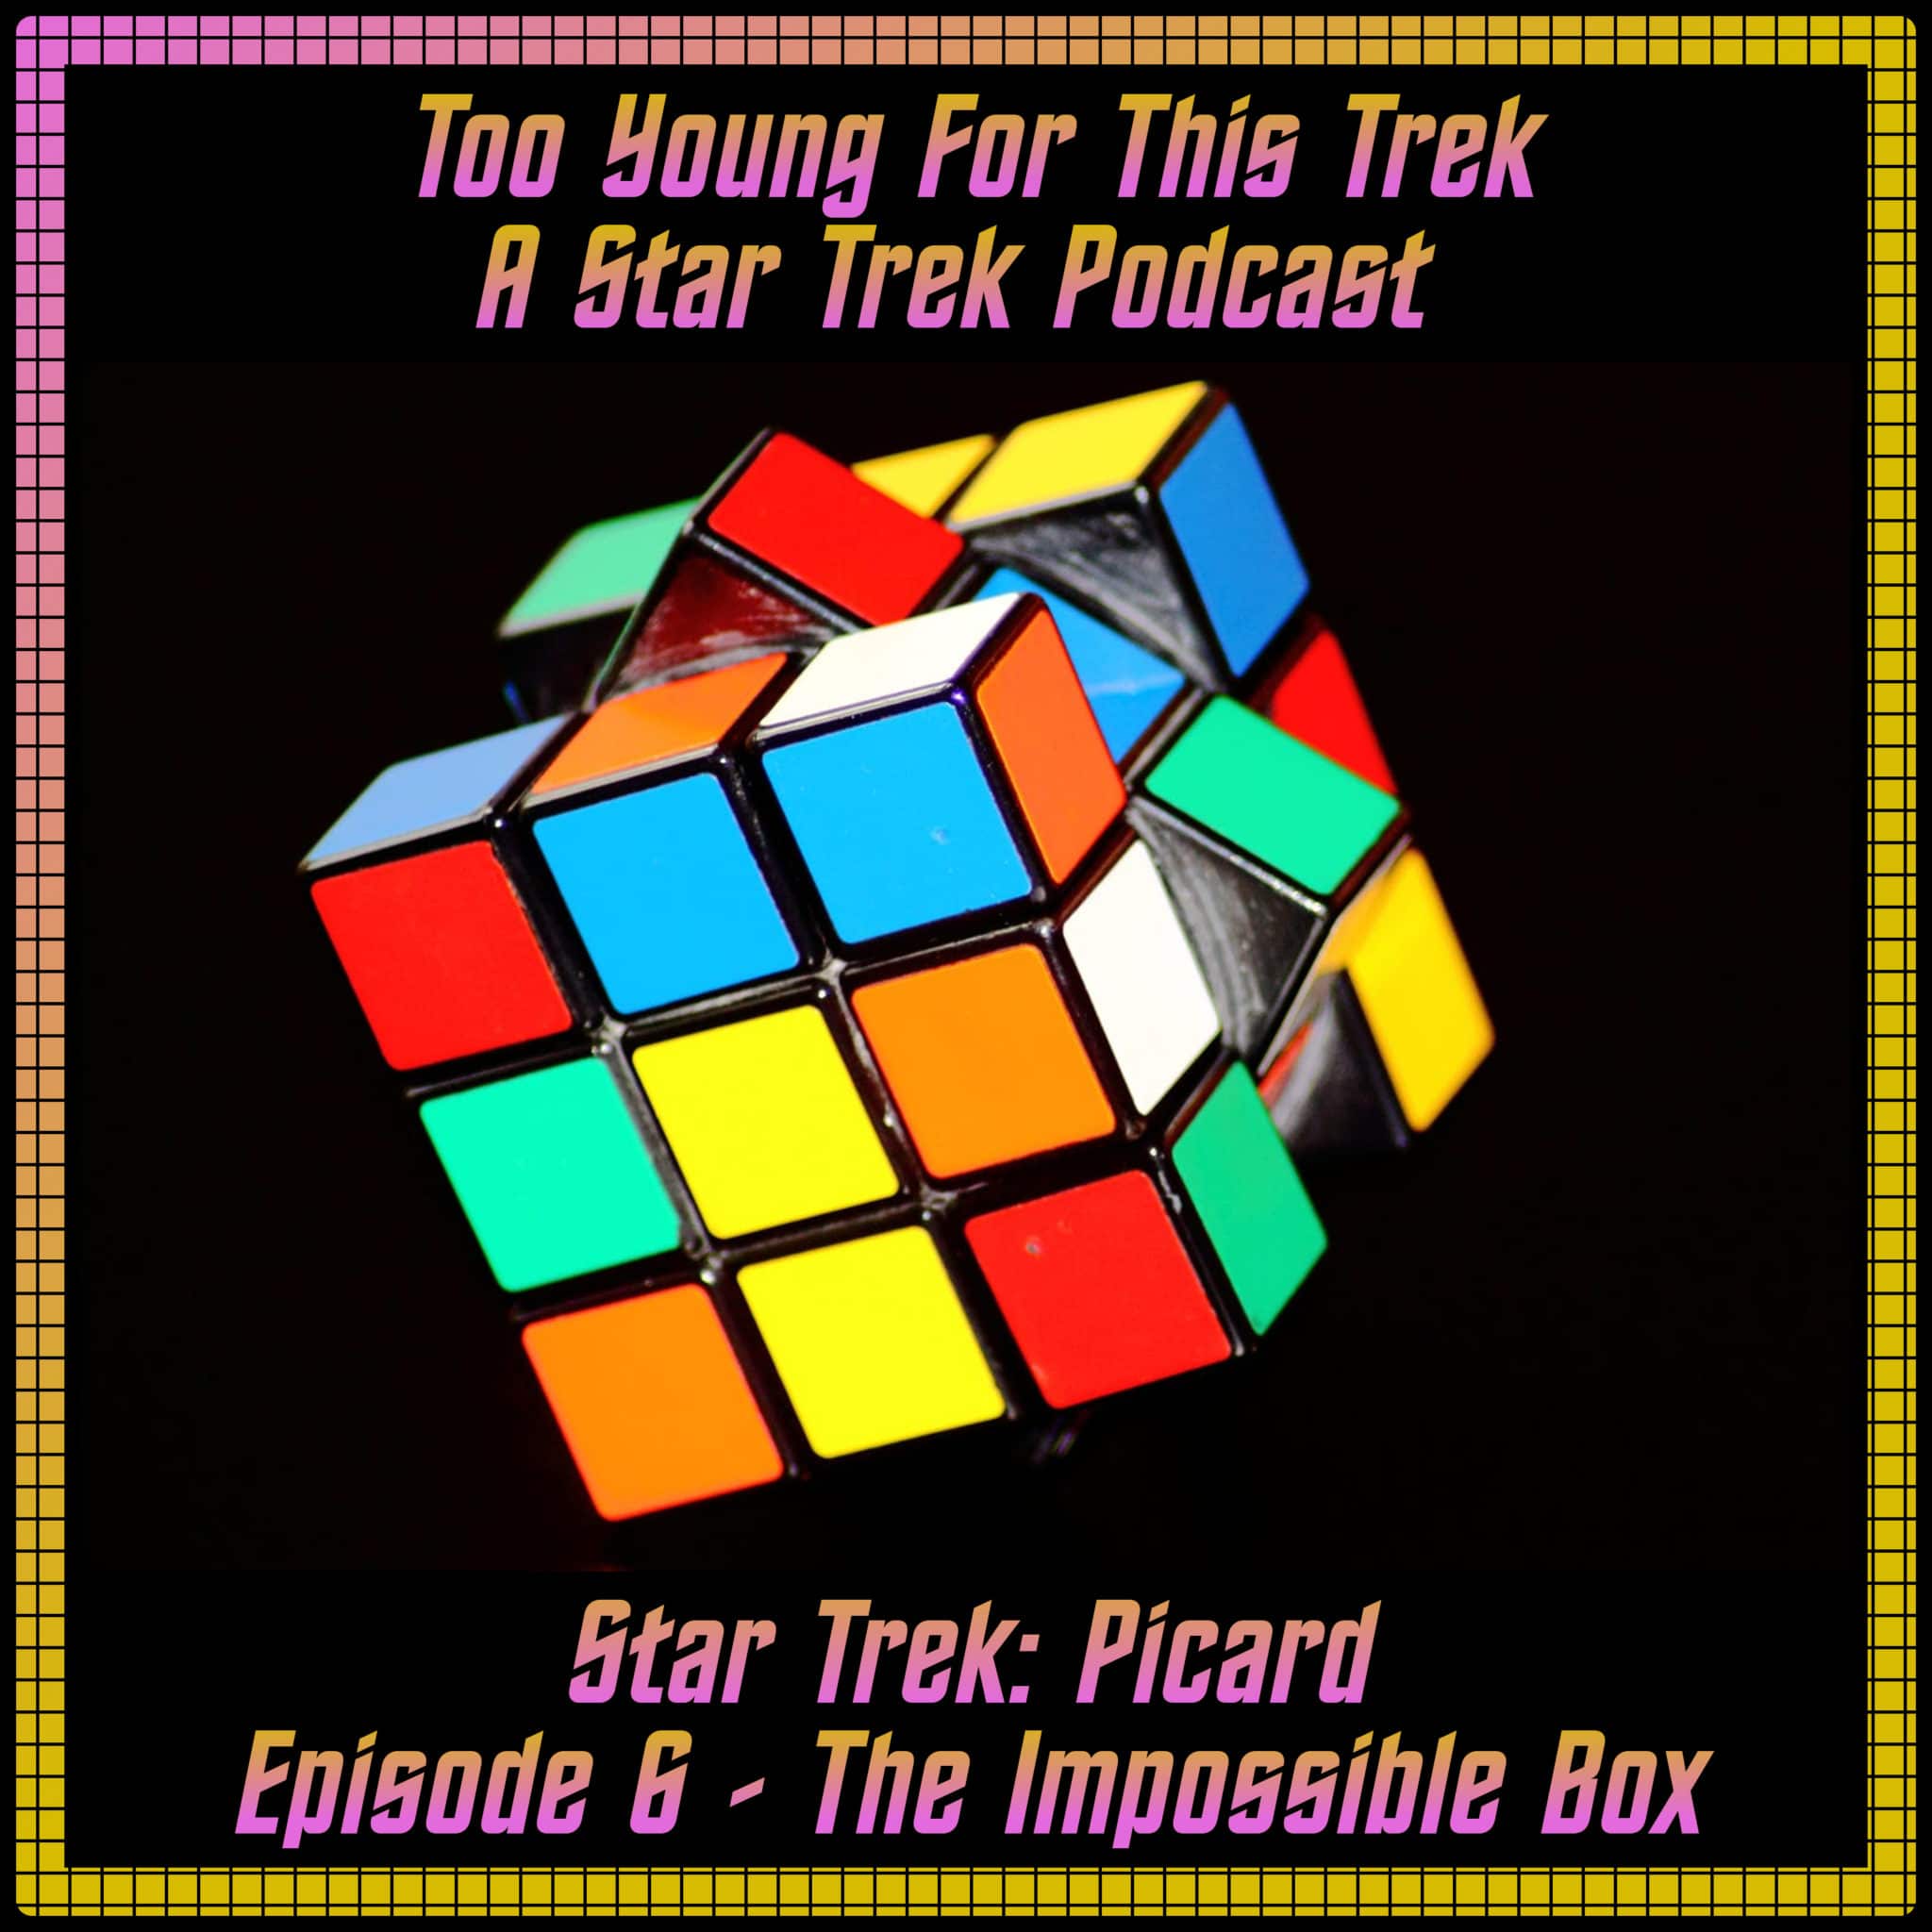 Star Trek: Picard Episode 6 - The Impossible Box - Recap